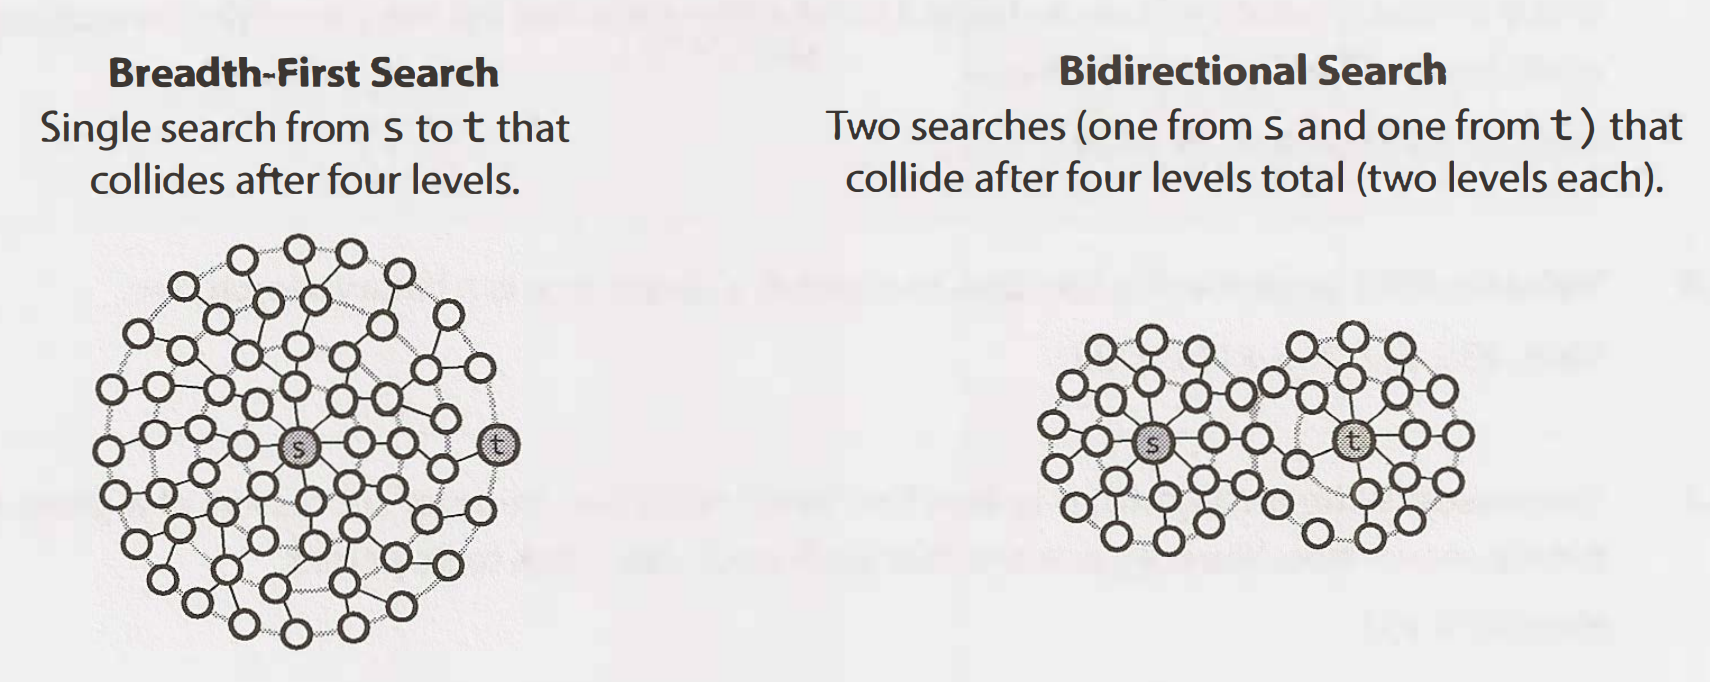 bidirectional-search